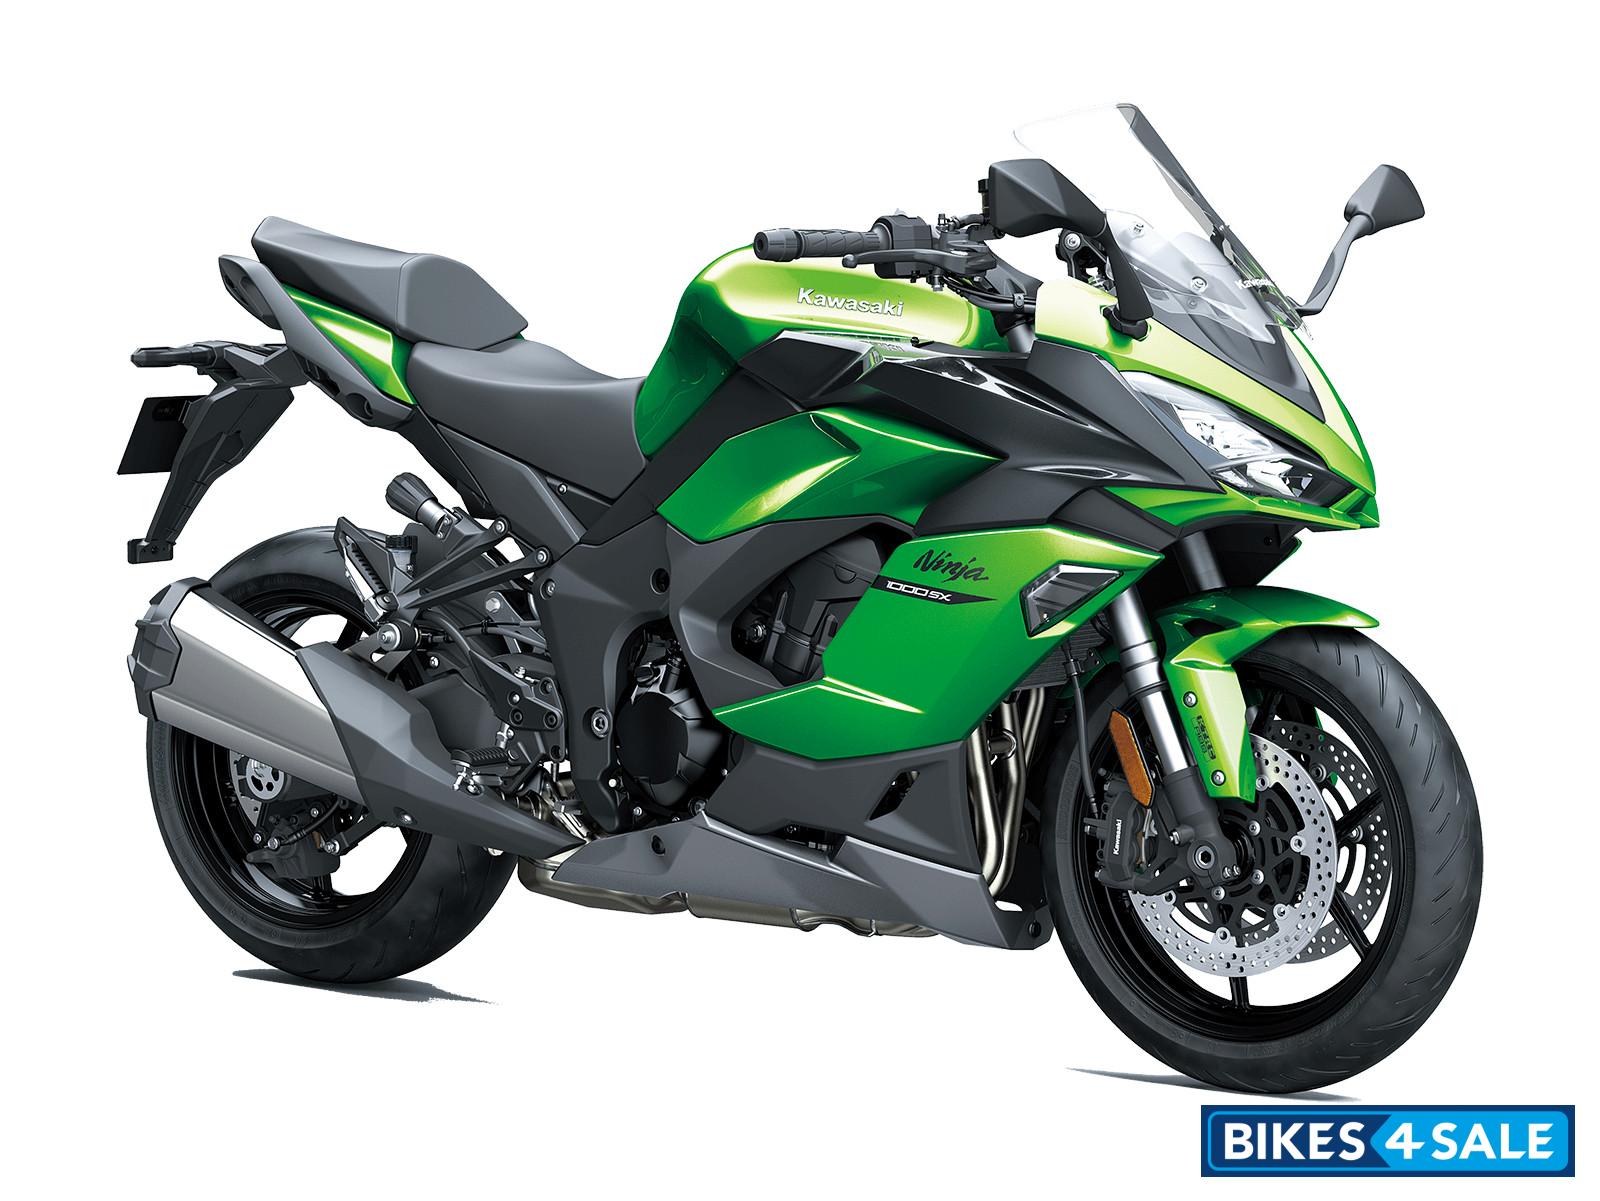 Kawasaki Ninja 1000SX BS6 2021 - Emerald Blazed Green/Metallic Carbon Gray/Metallic Graphite Gray